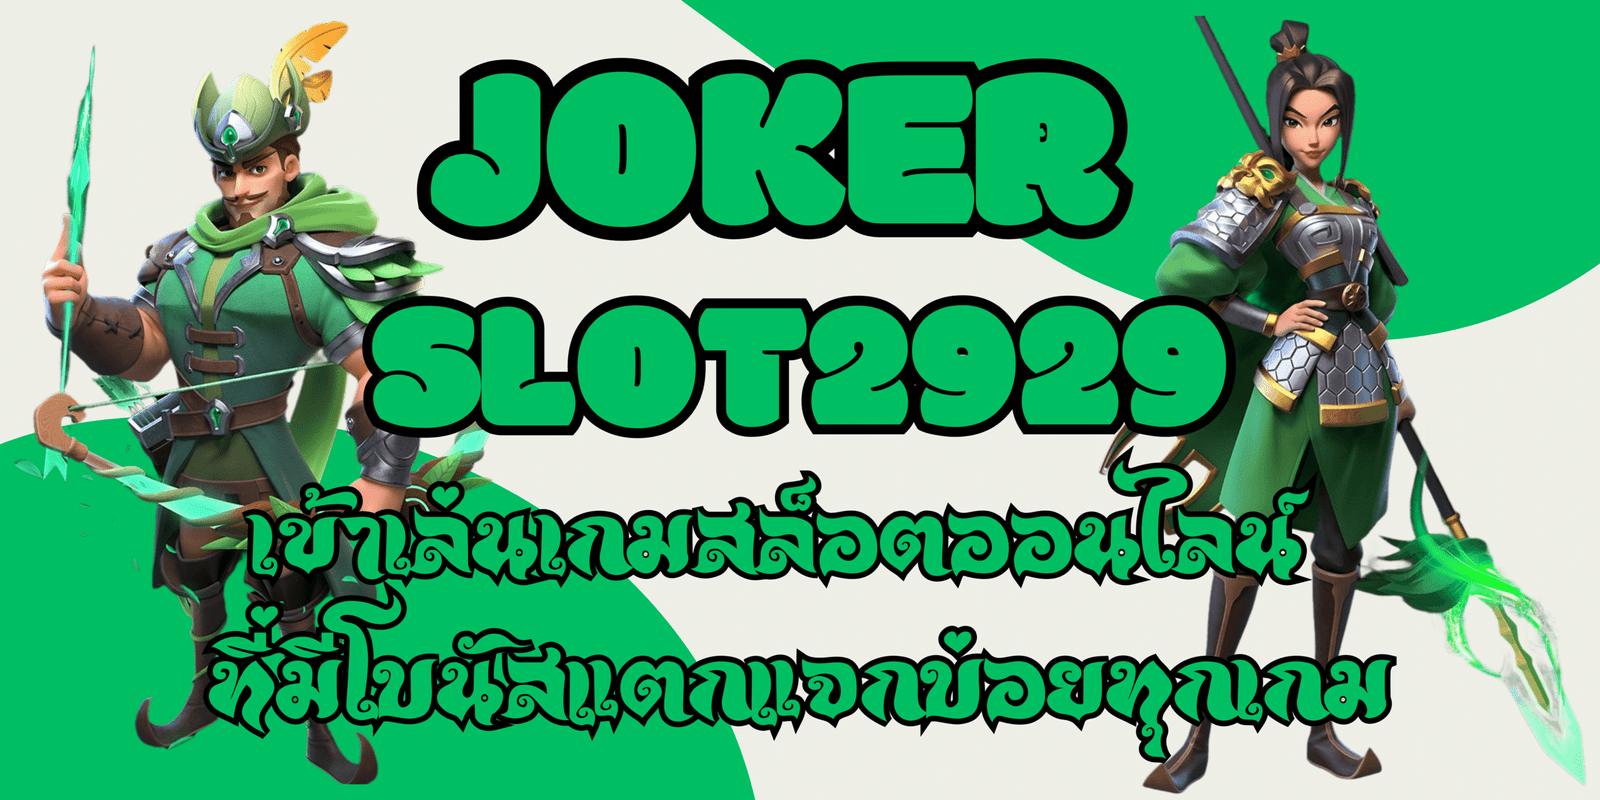 joker-slot2929-สมัครสมาชิก